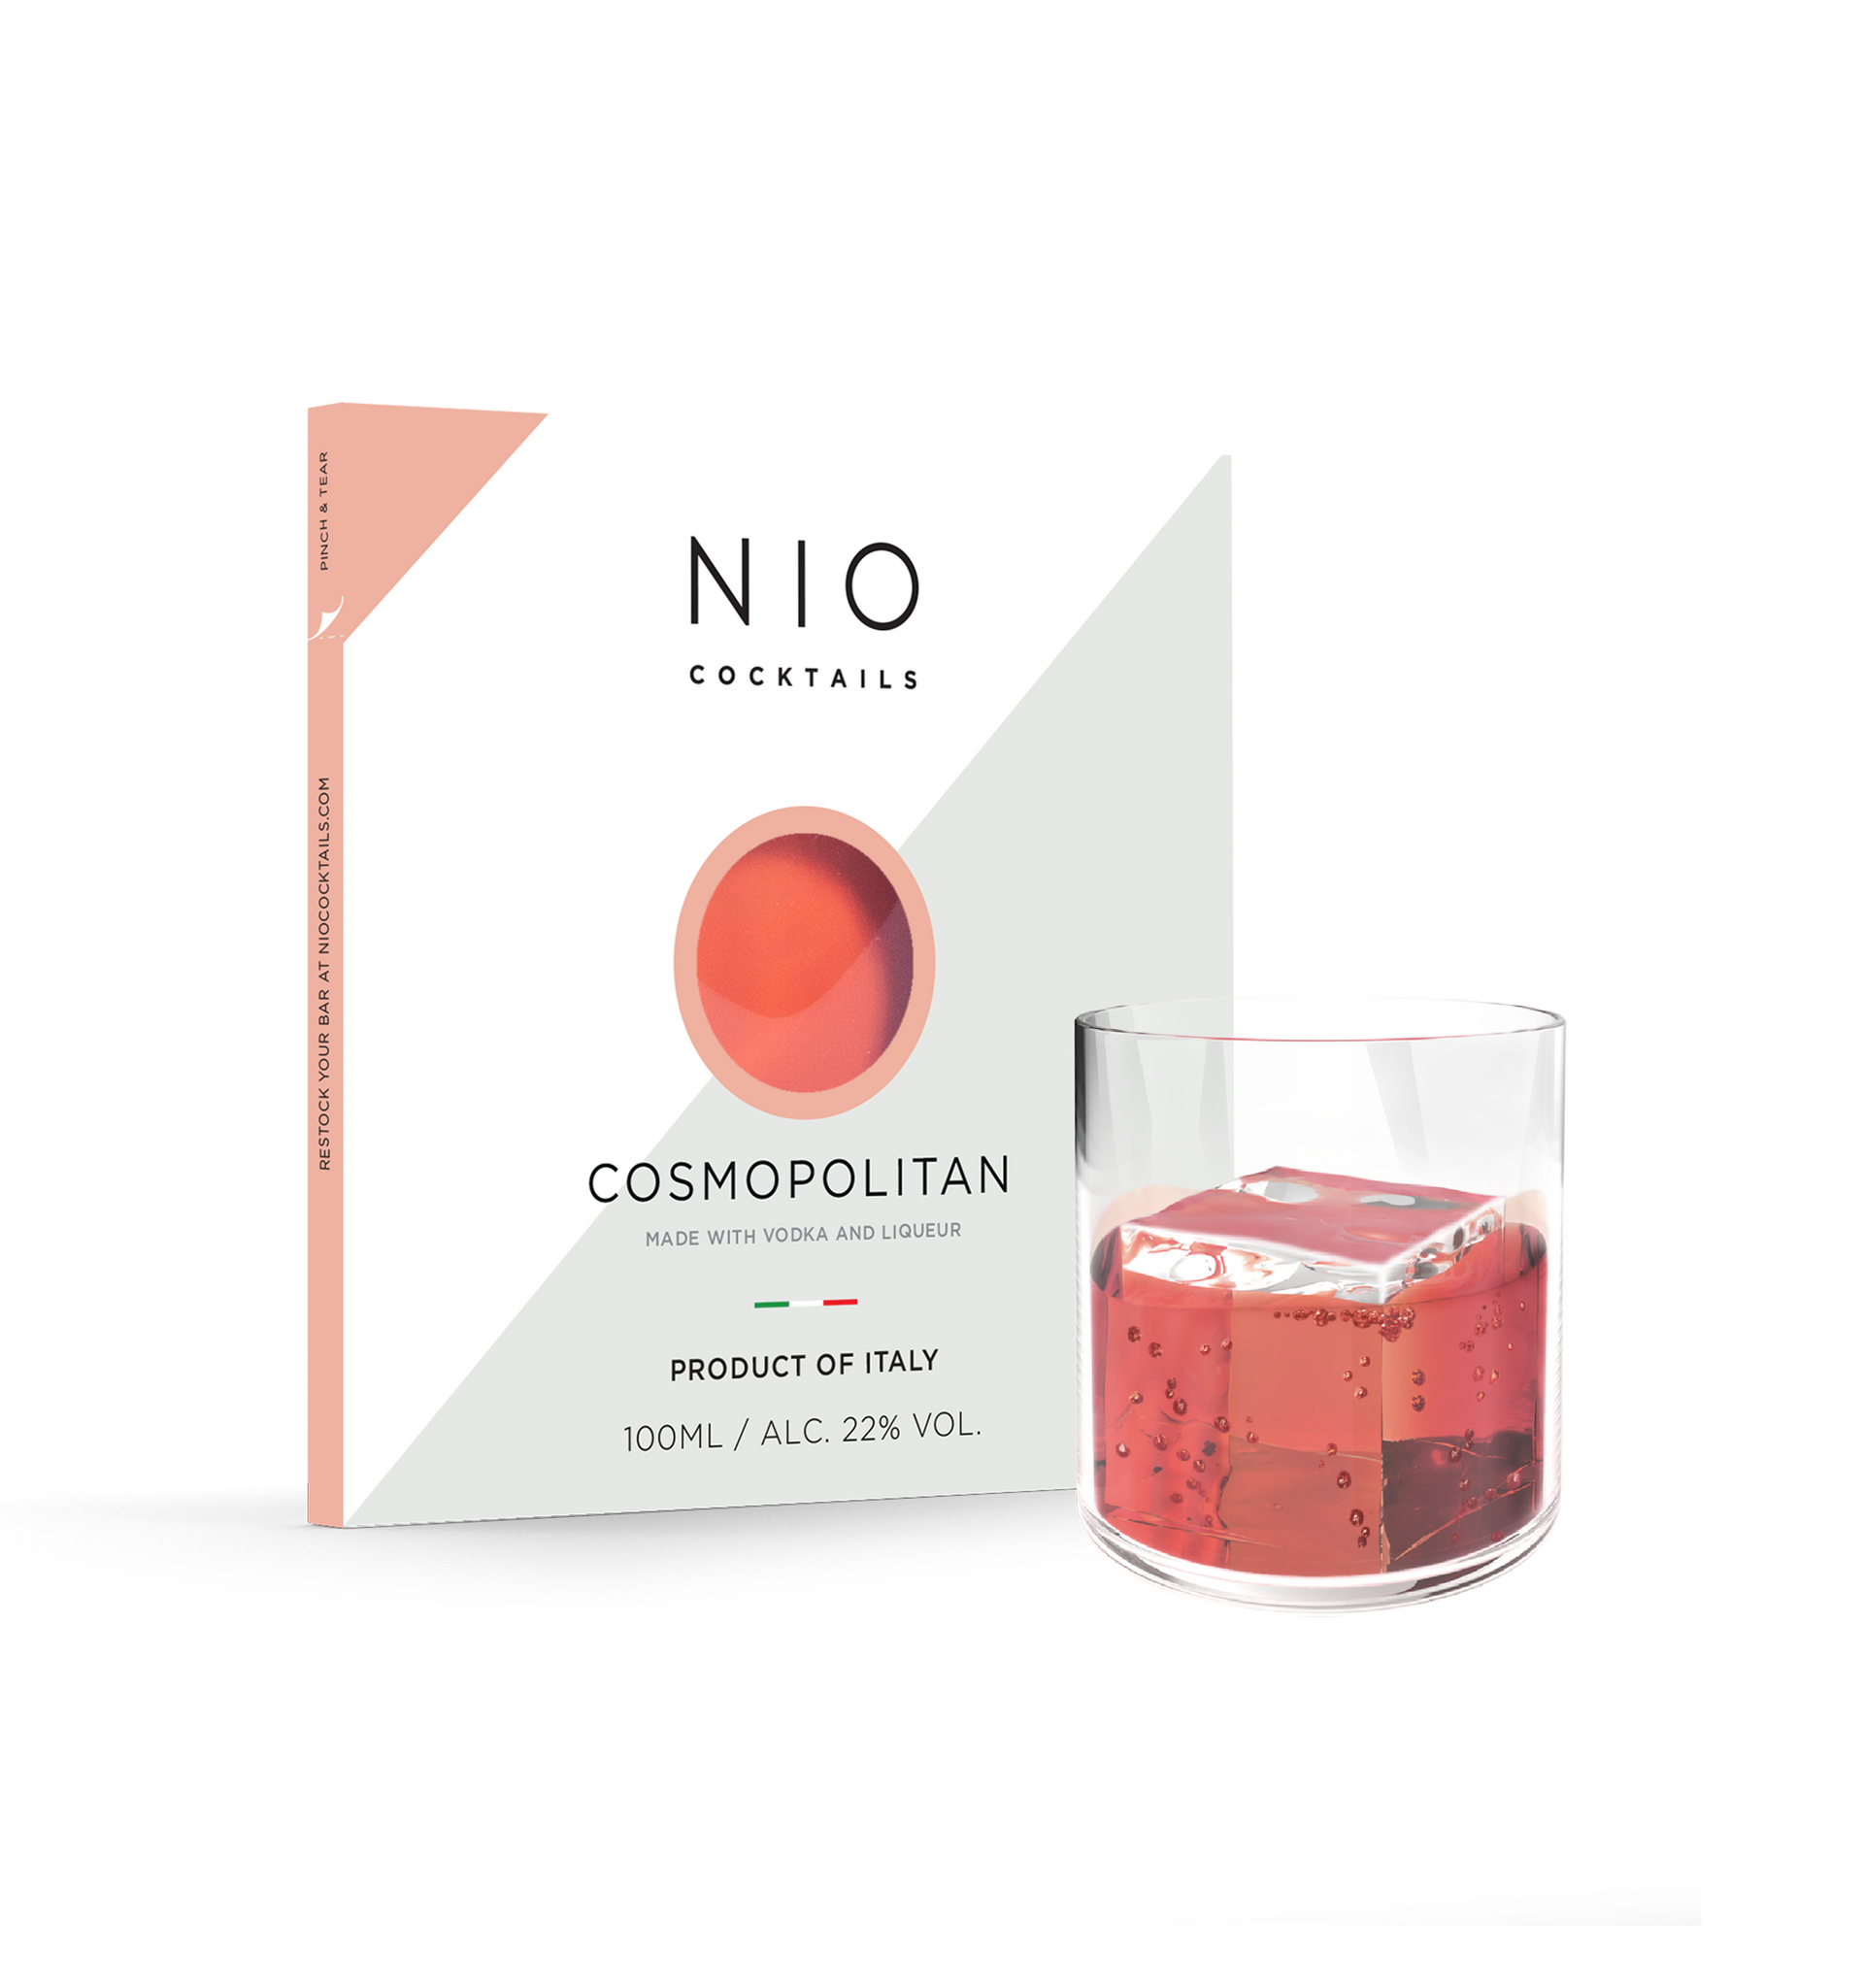 NIO COCKTAILS Cosmopolitan glass